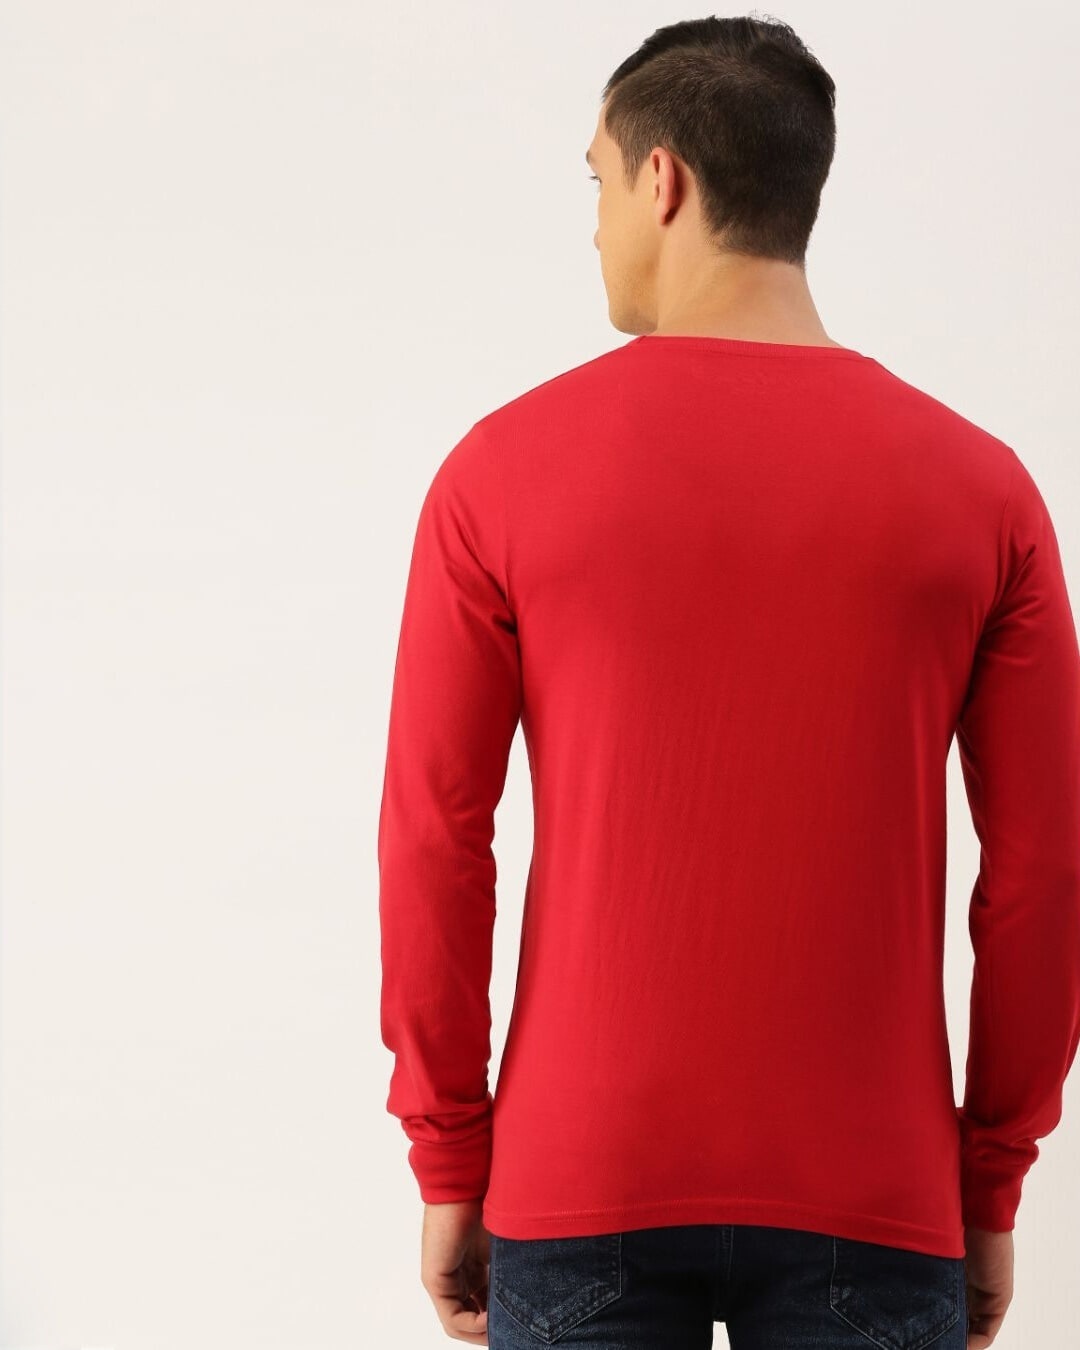 Shop Men's Red Striped T-shirt